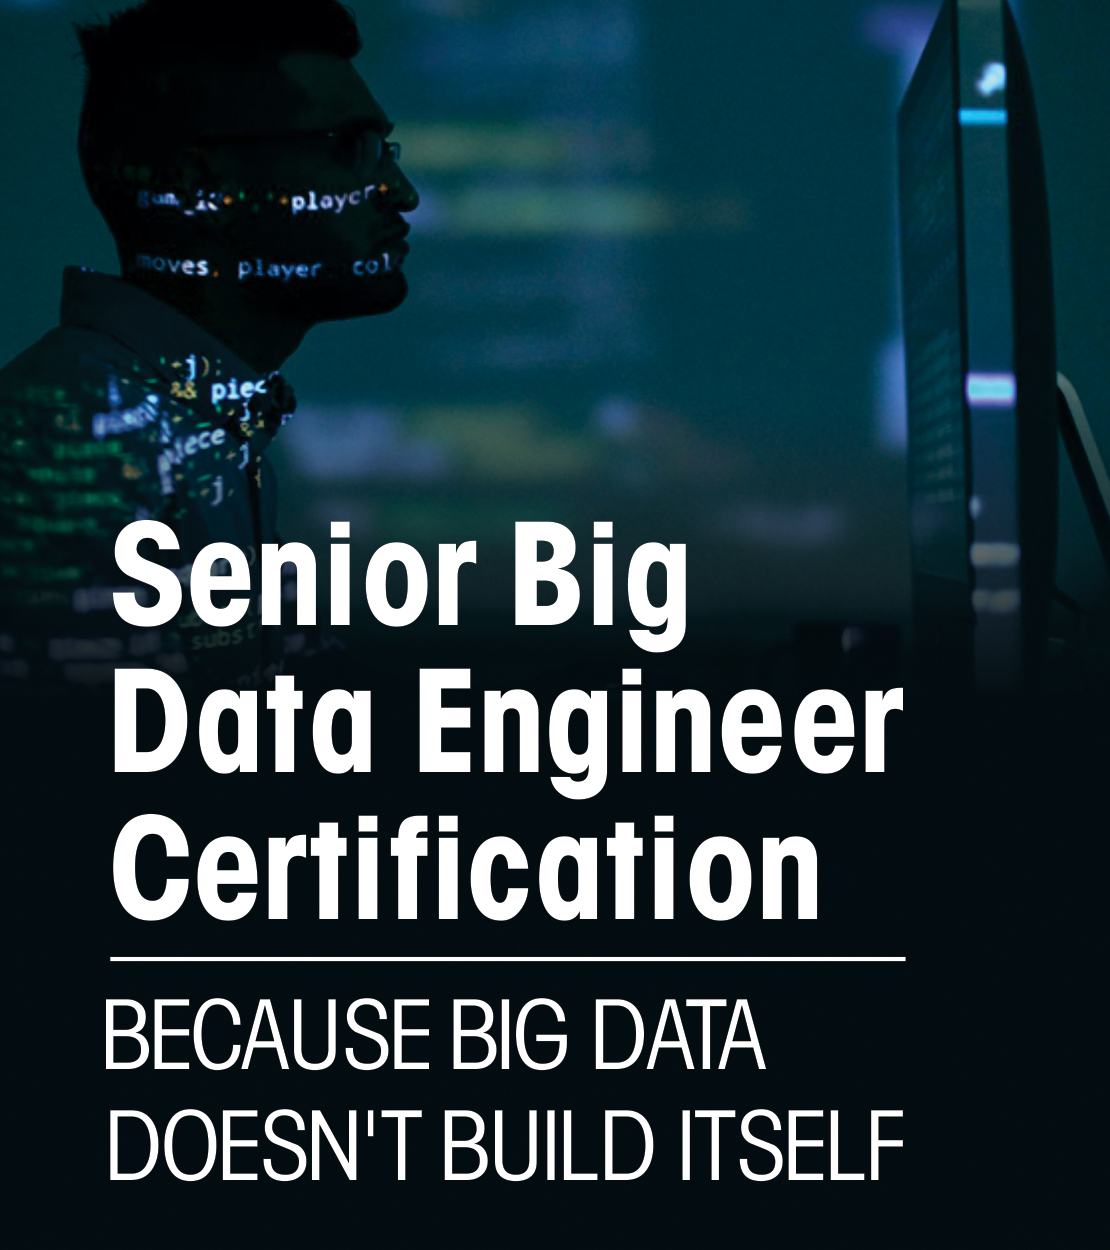 Senior Big Data Engineer Certification - Because Big Data Doesn’t Build Itself